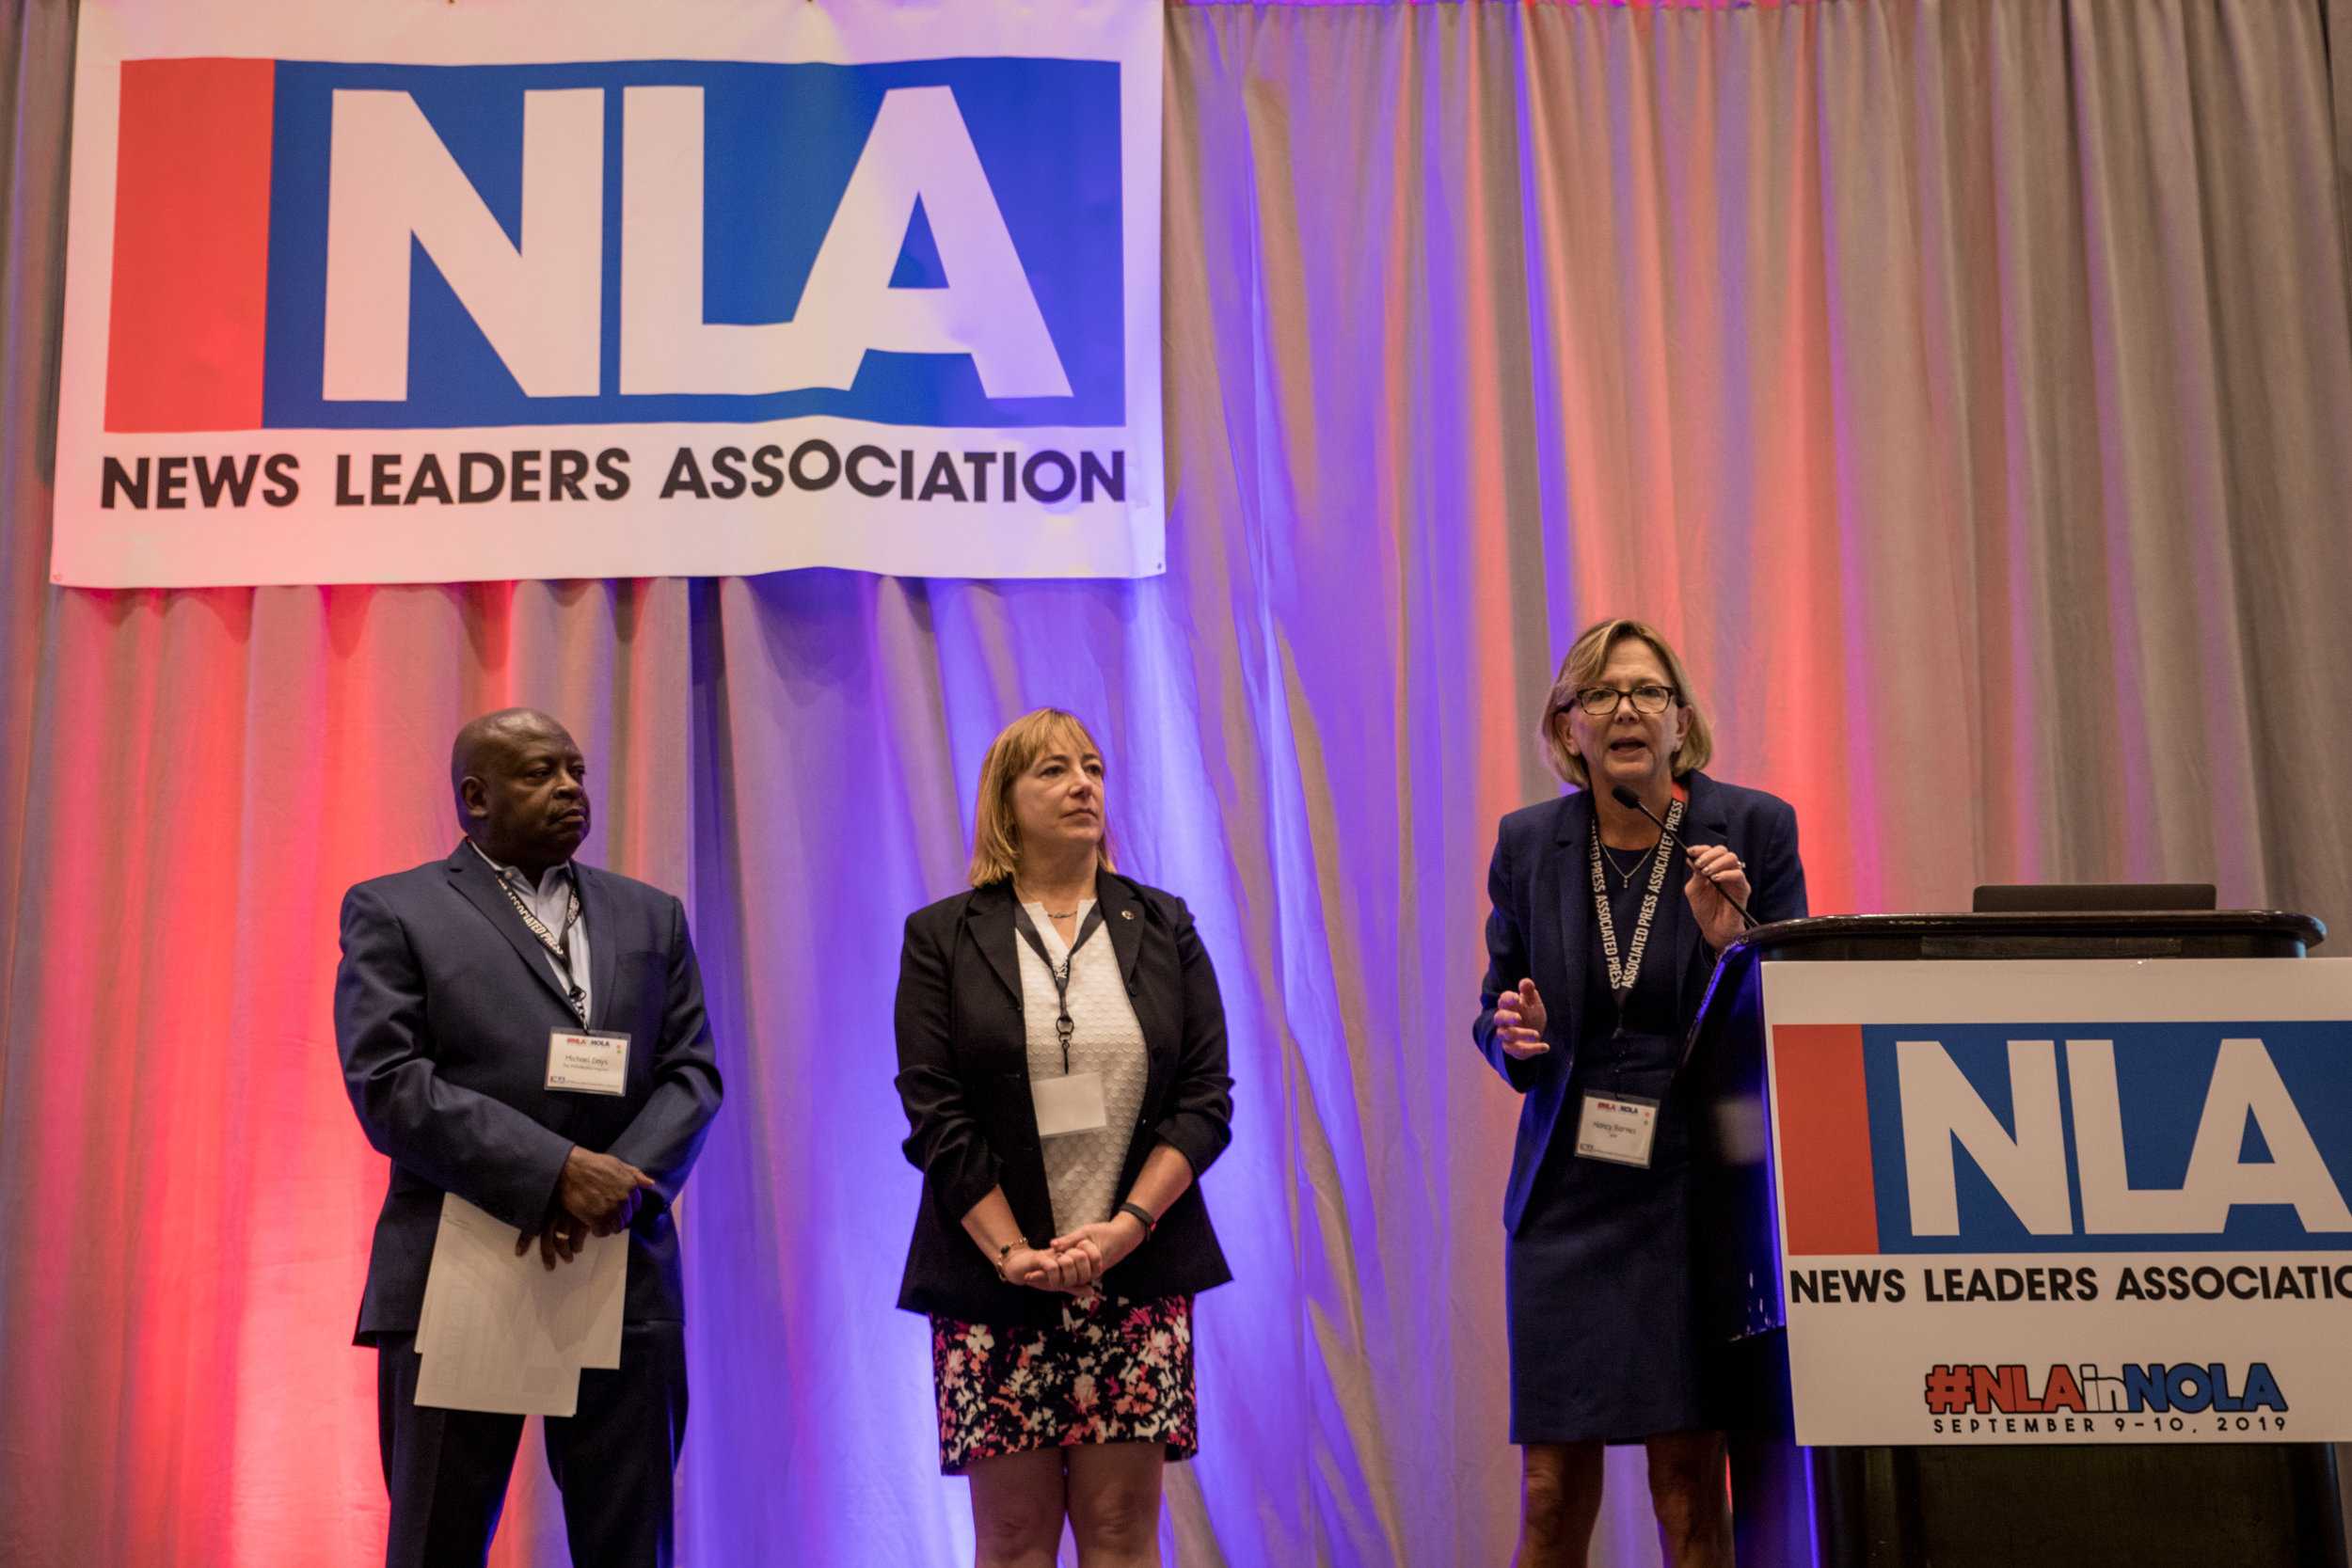  Nancy Barnes, Angie Muhs and Michael Days speak at the NLA Conference Opening.  Photo Courtesy: Eric Pritchett  